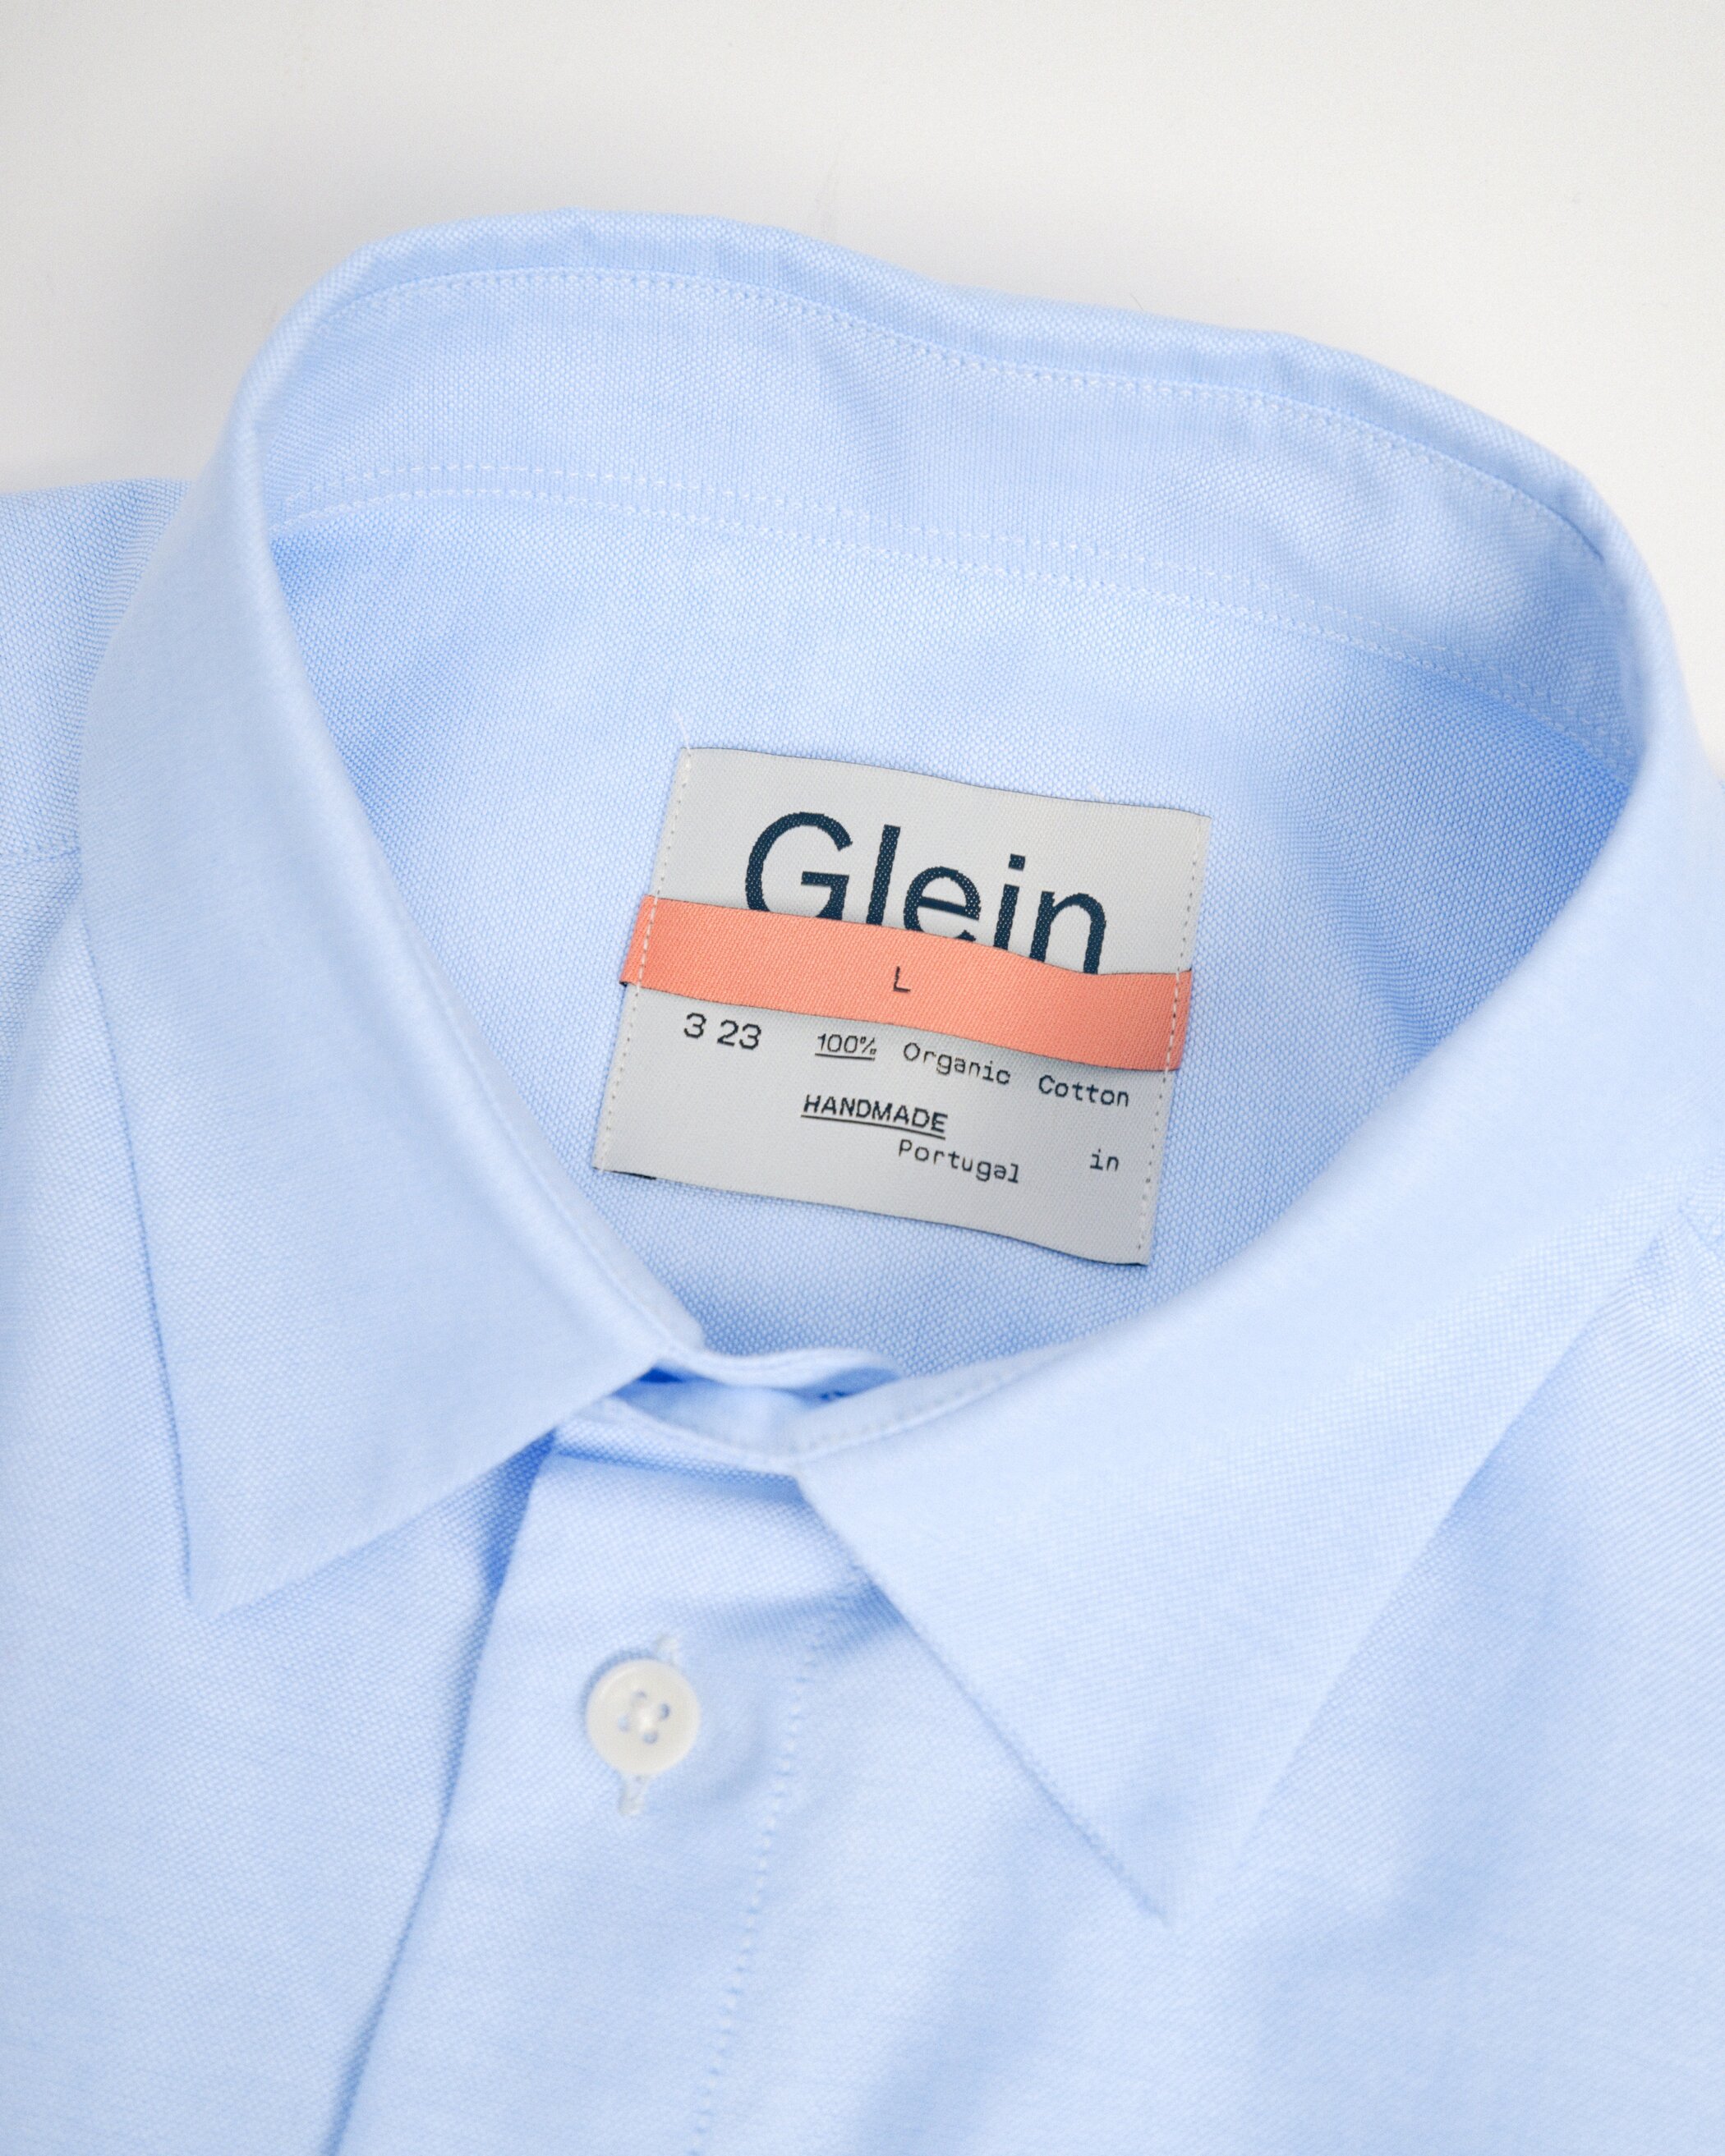 Glein - Oxford Shirt